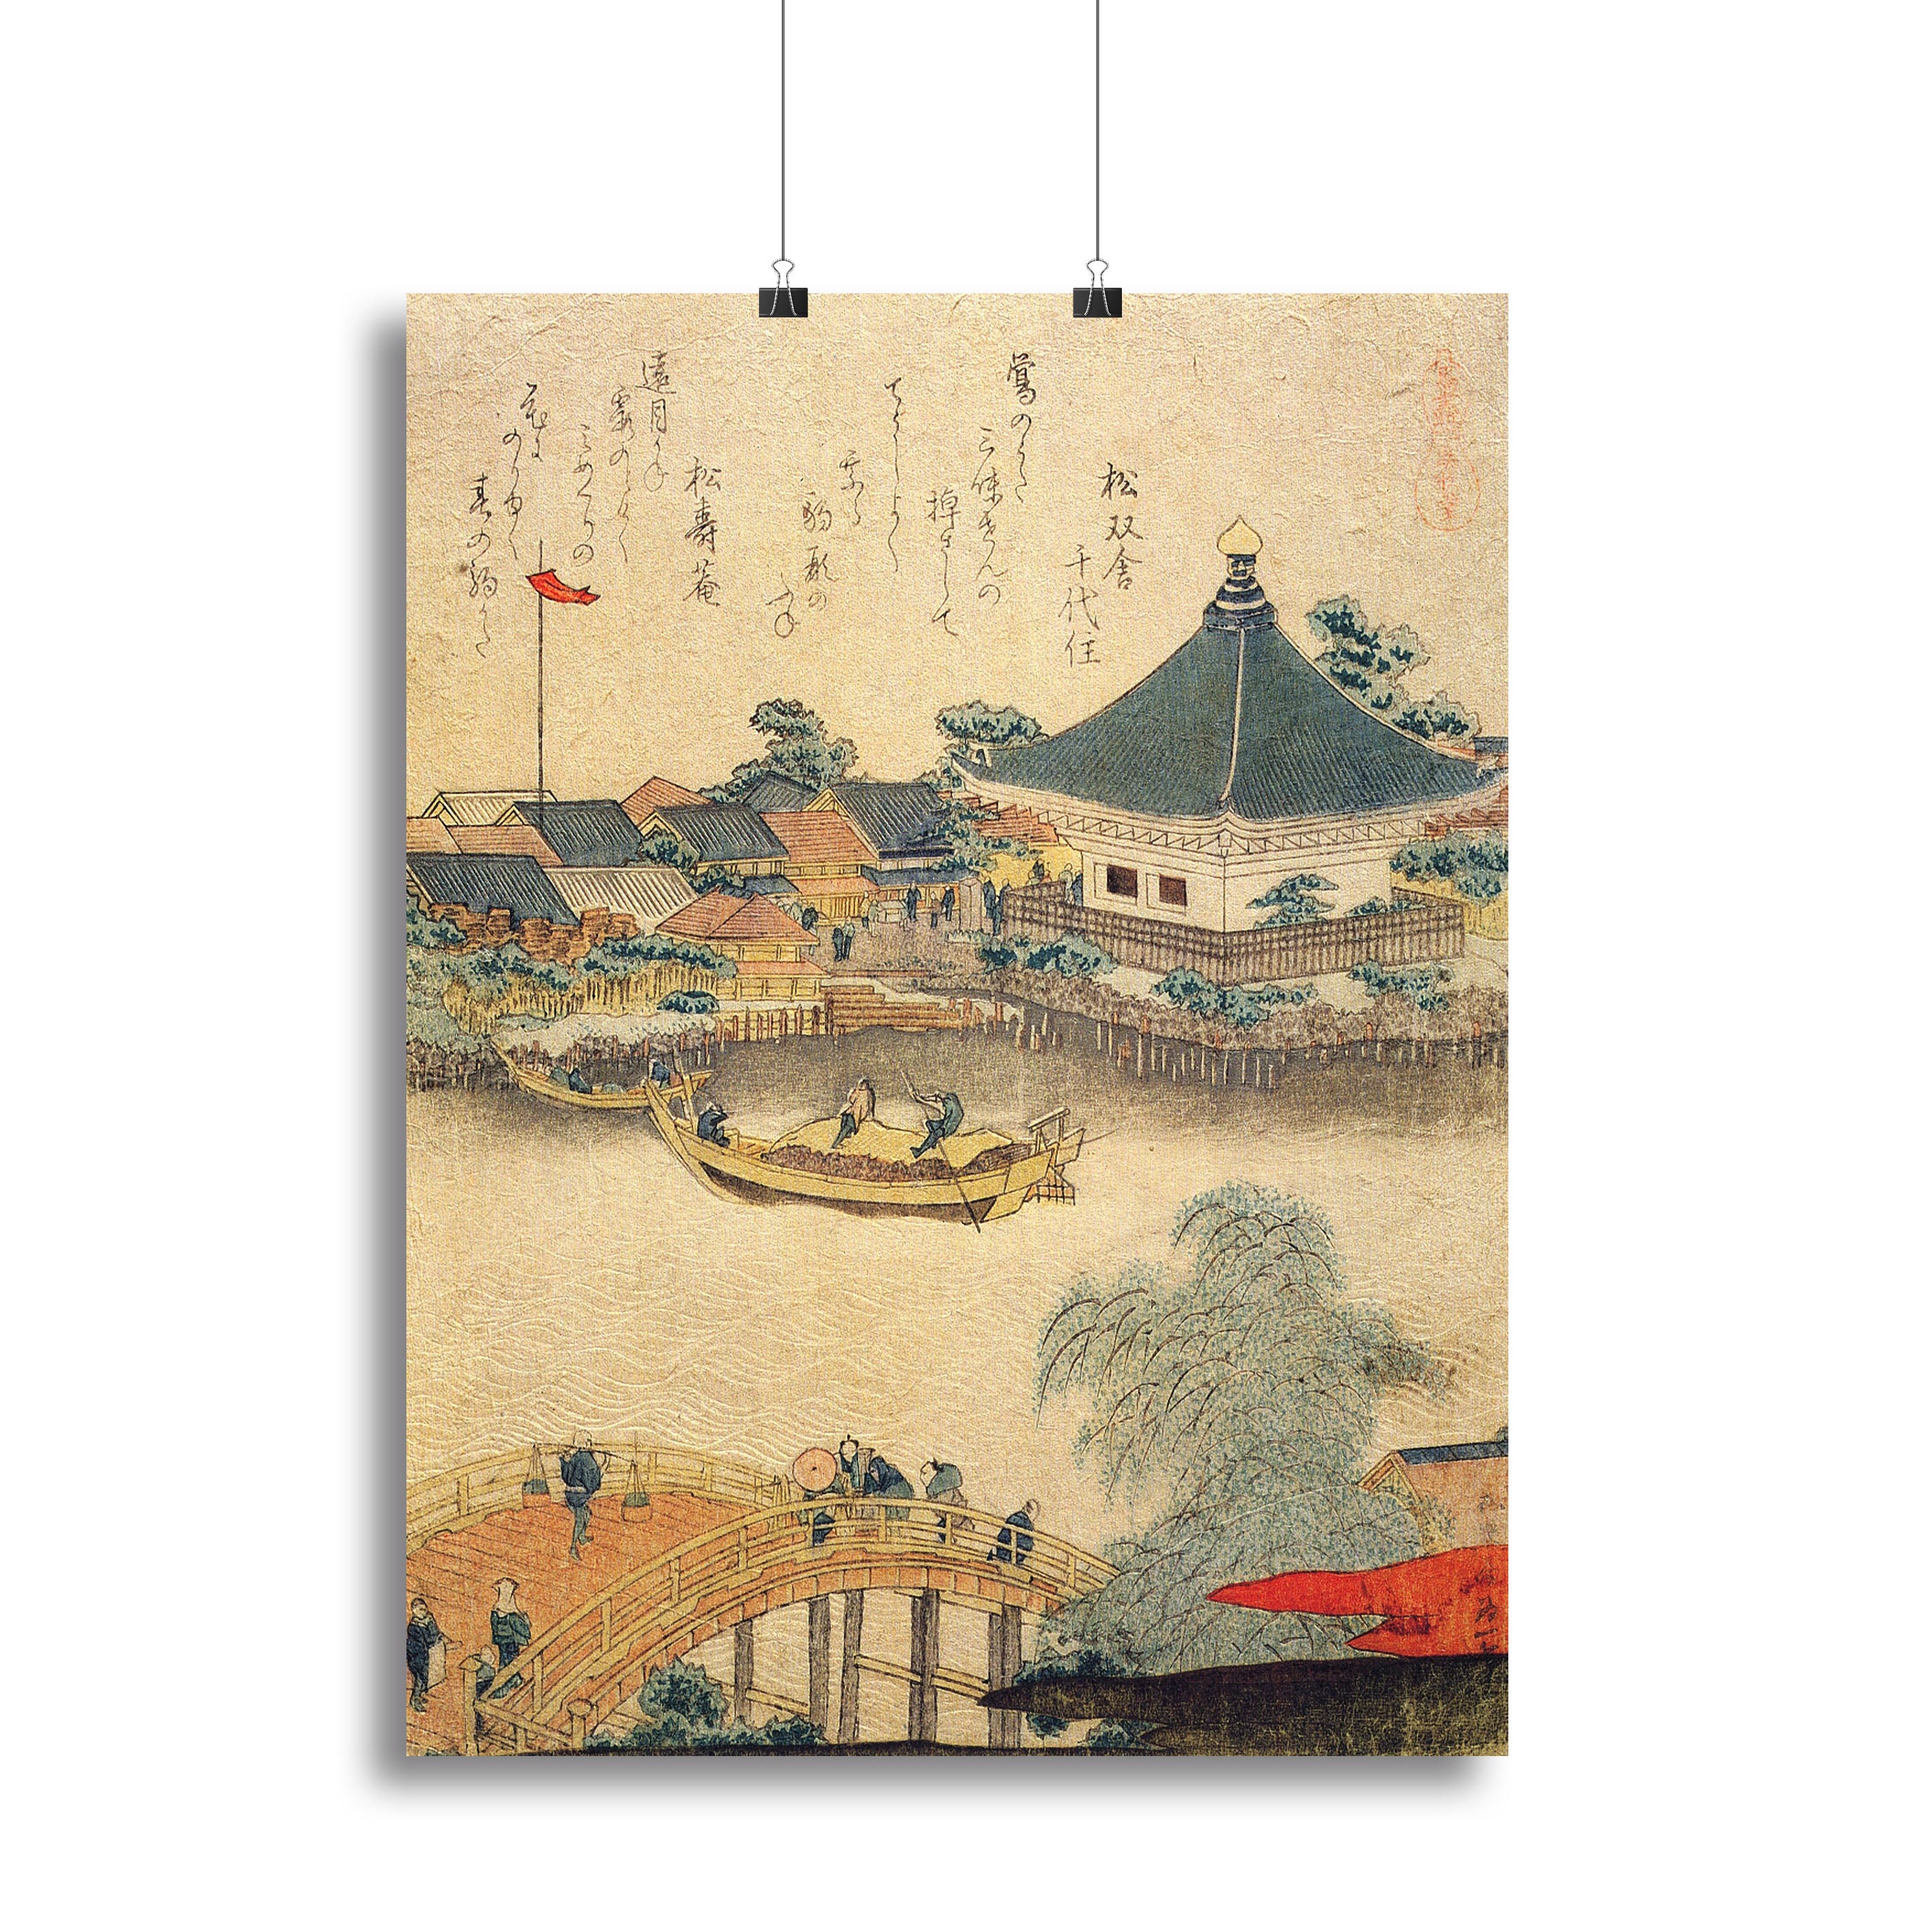 The Shrine Komagata Do in Komagata by Hokusai Canvas Print or Poster - Canvas Art Rocks - 2